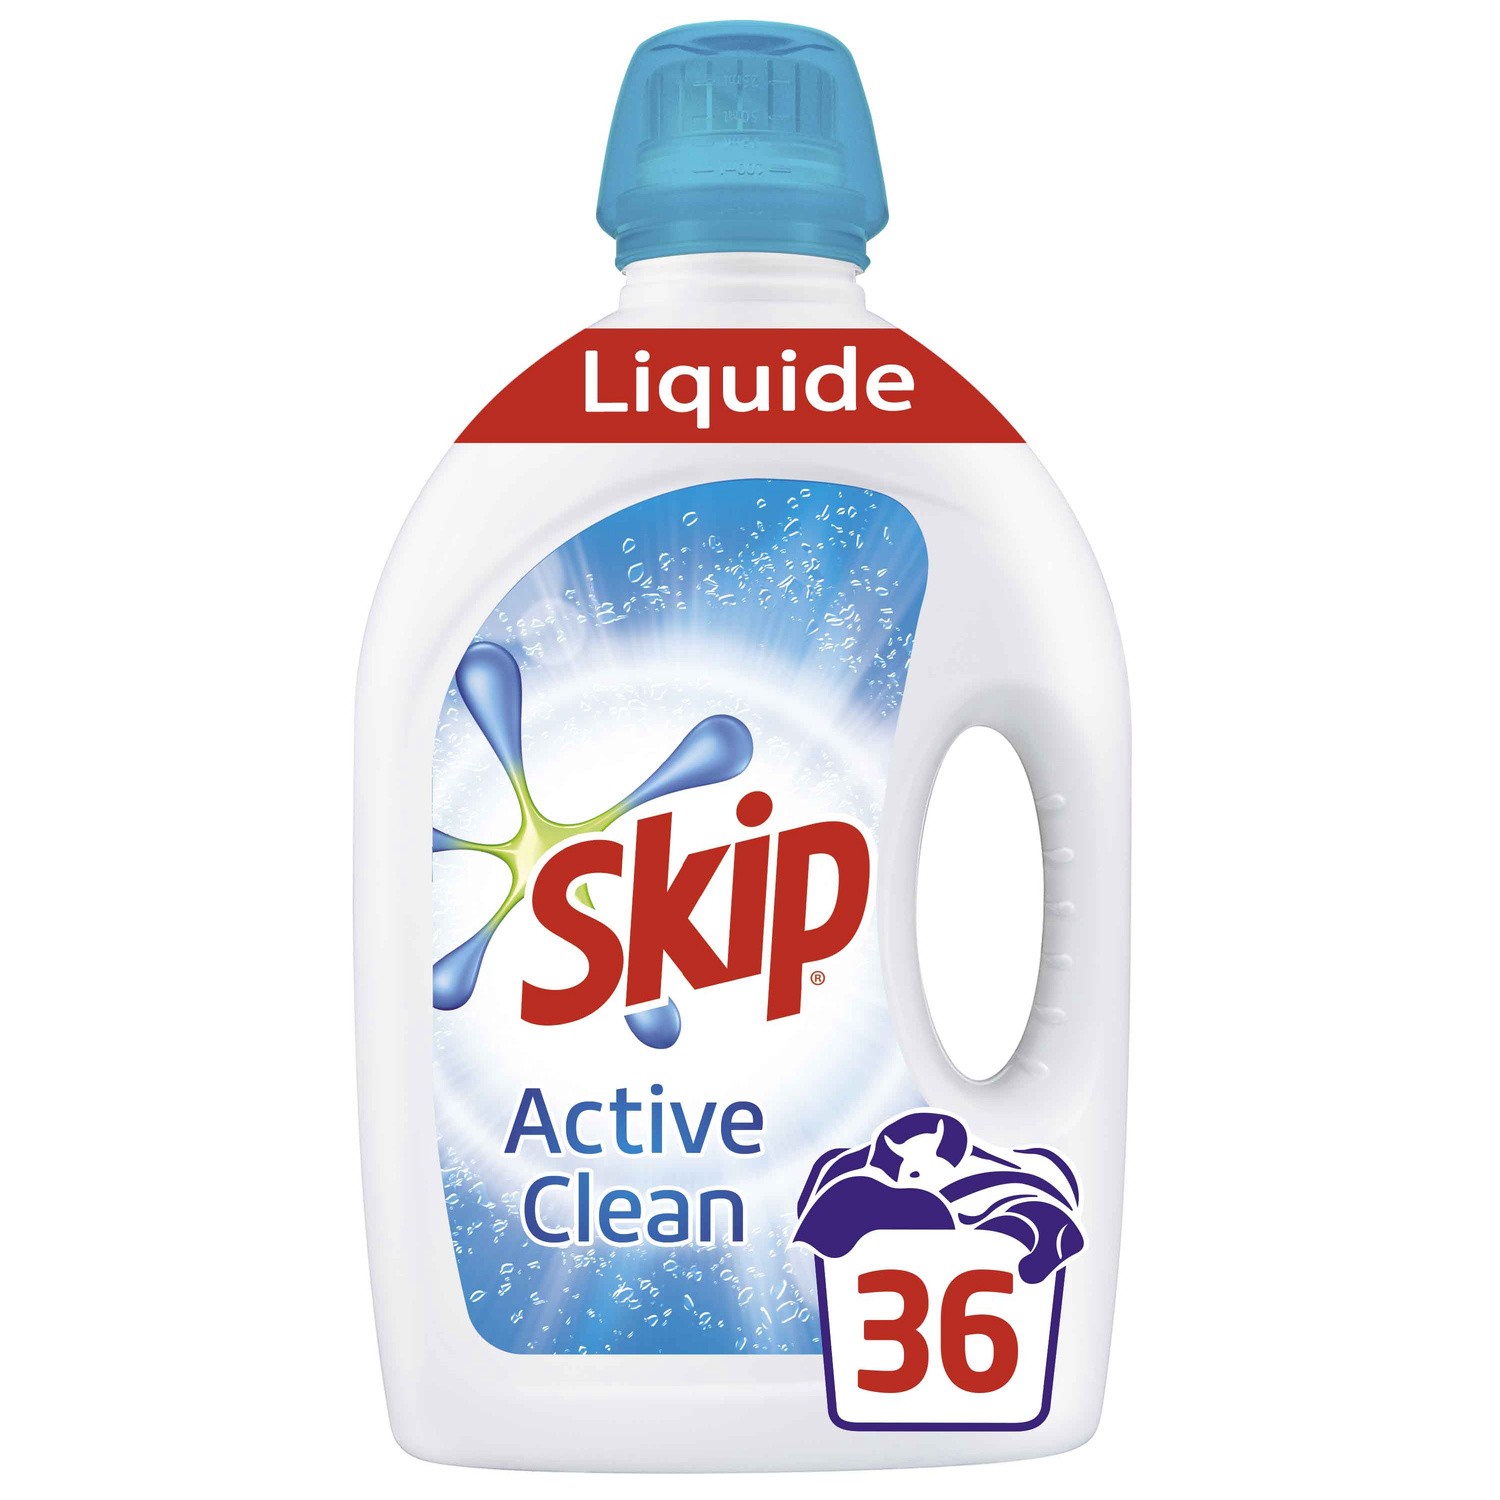 Promo Skip lessive liquide active clean chez Casino Hyperfrais